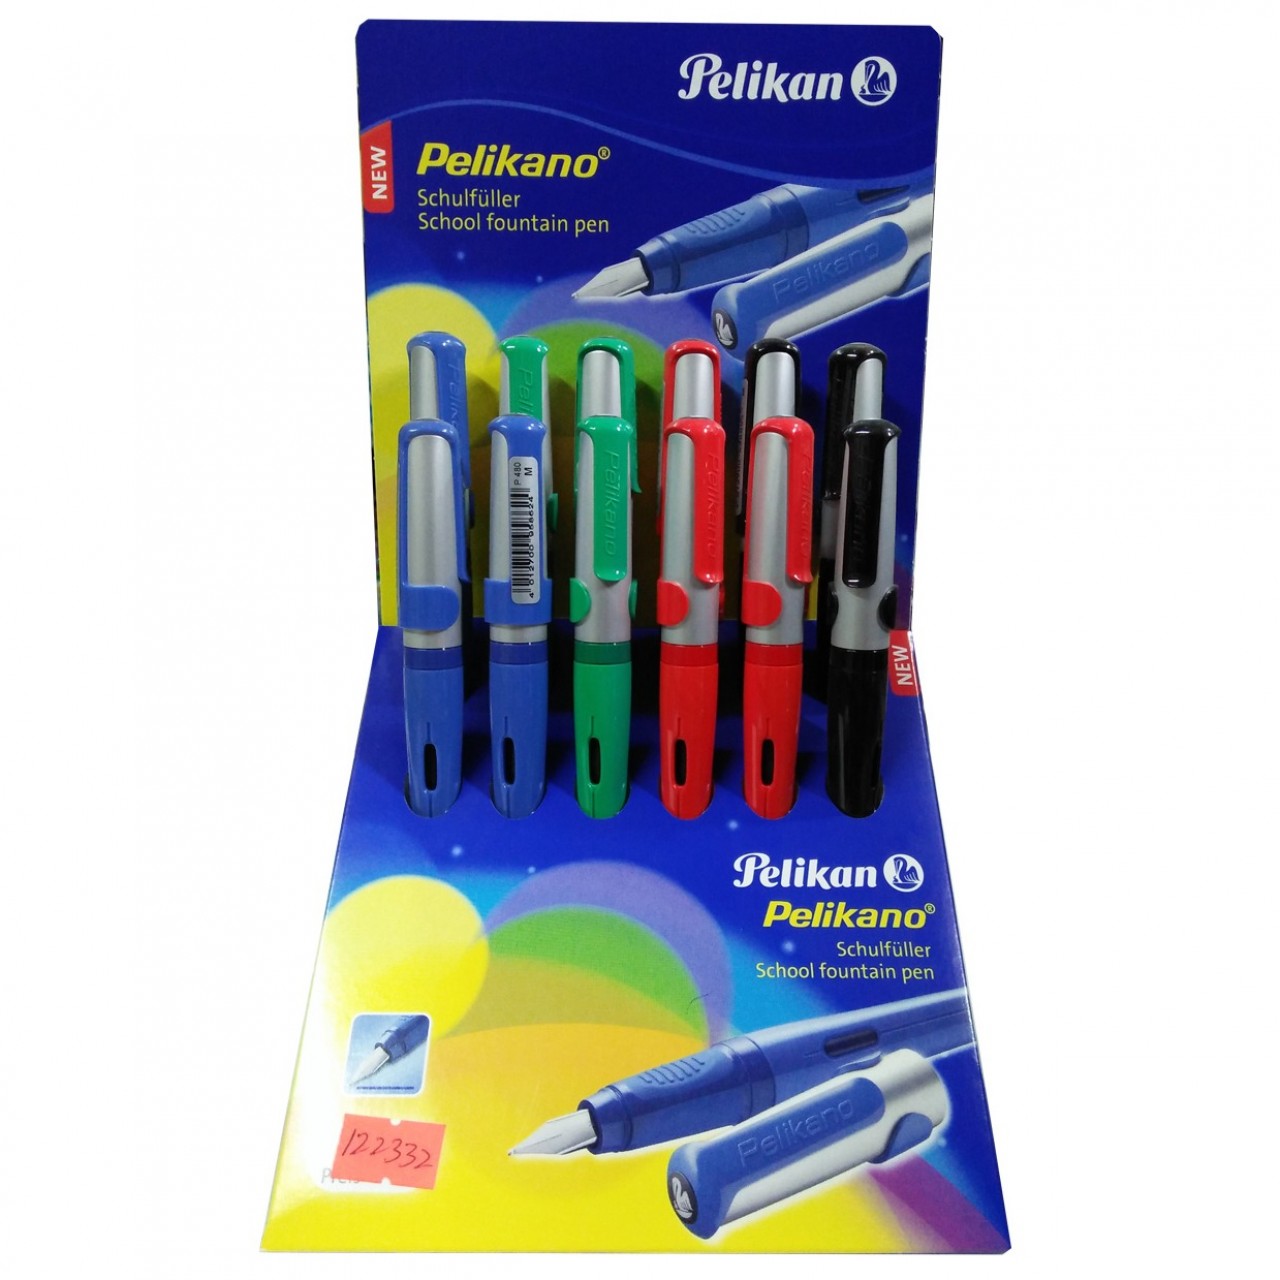 Pelikan School Fountain Pen For Students